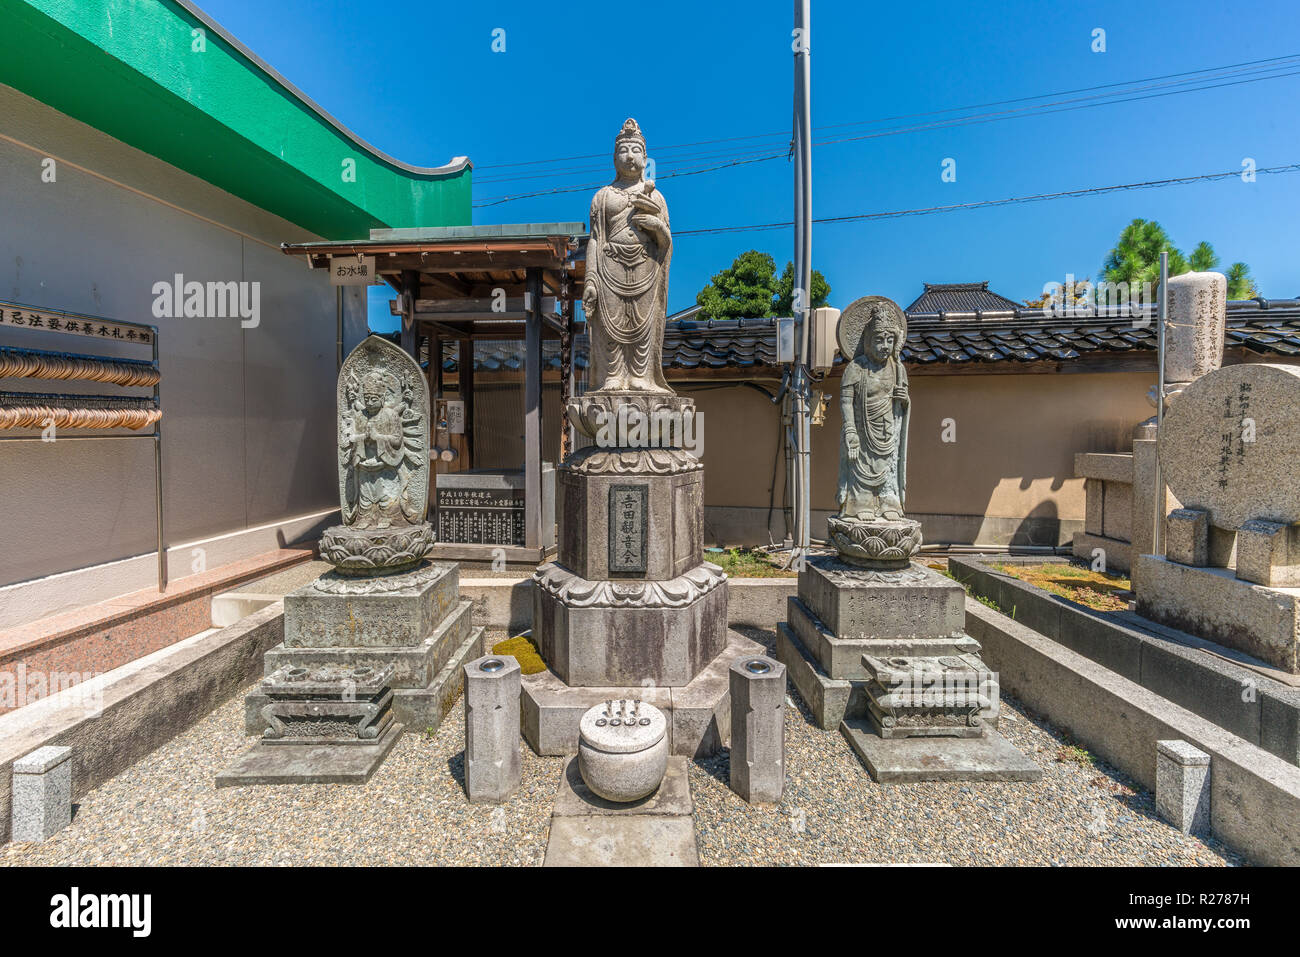 Kanazawa, Ishikawa Japan - August 22, 2018 : Bodhisattva Kannon statues at Seionnokoaya Saihou-ji Temple. Tendai sect Buddhist temple located in Kanaz Stock Photo